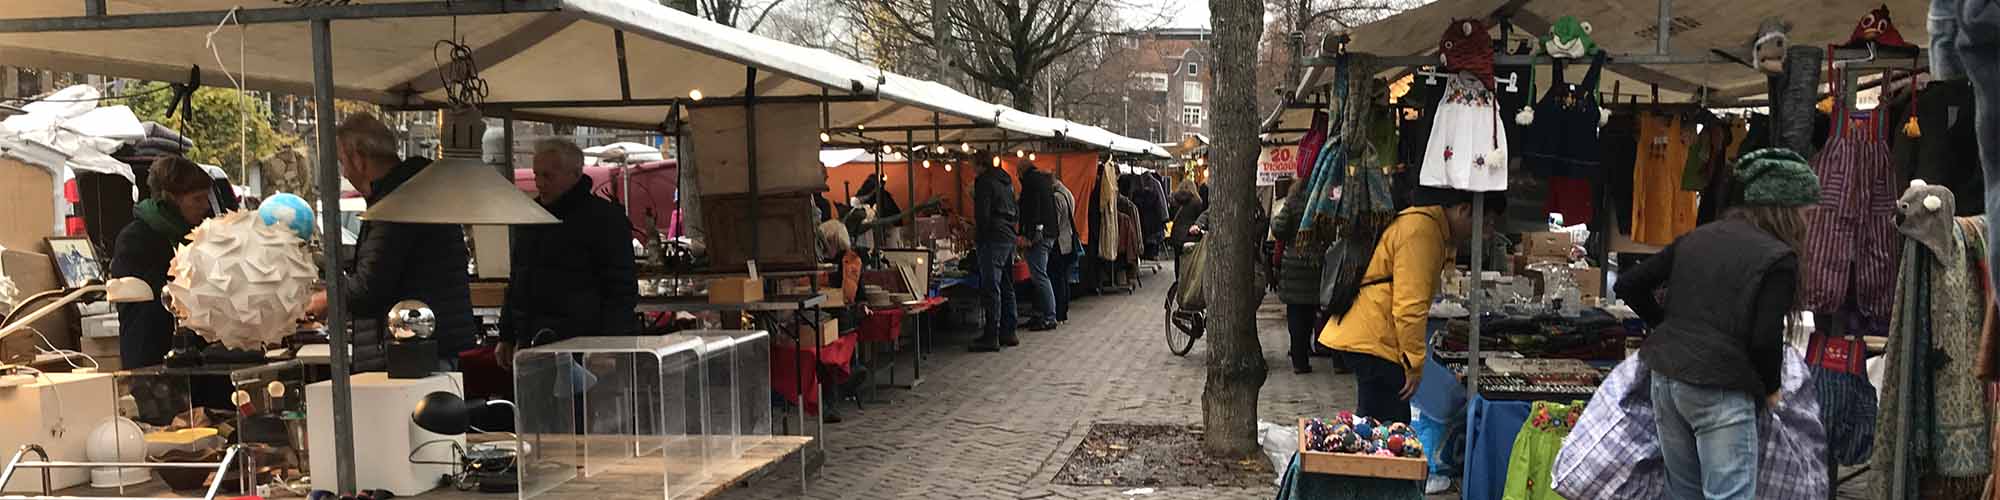 https://www.noordermarkt-amsterdam.nl/uploads/images/fotostroke/Heden-0.jpg